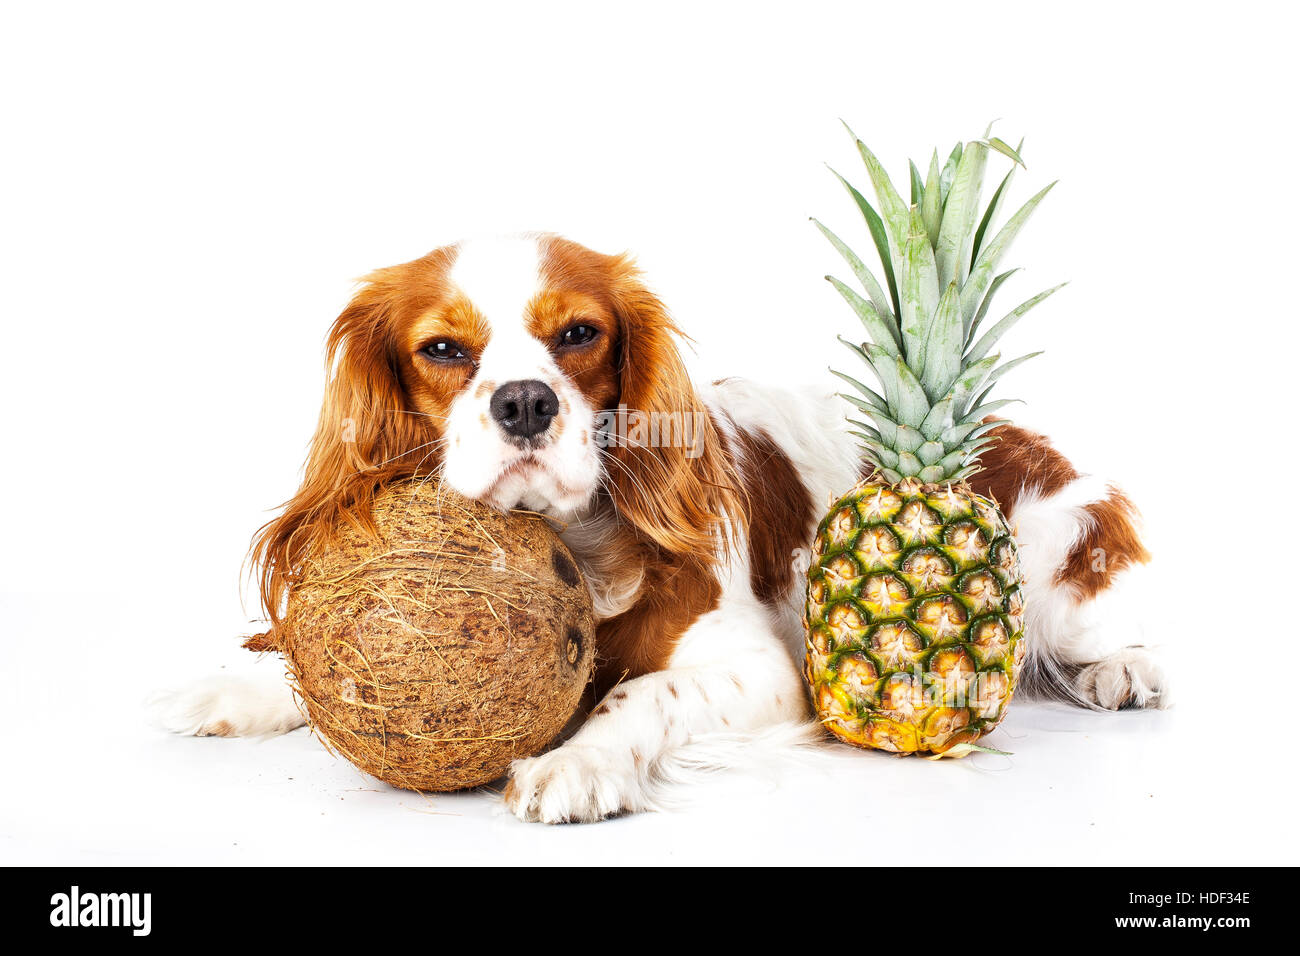 Dog with fruits Stock Photo